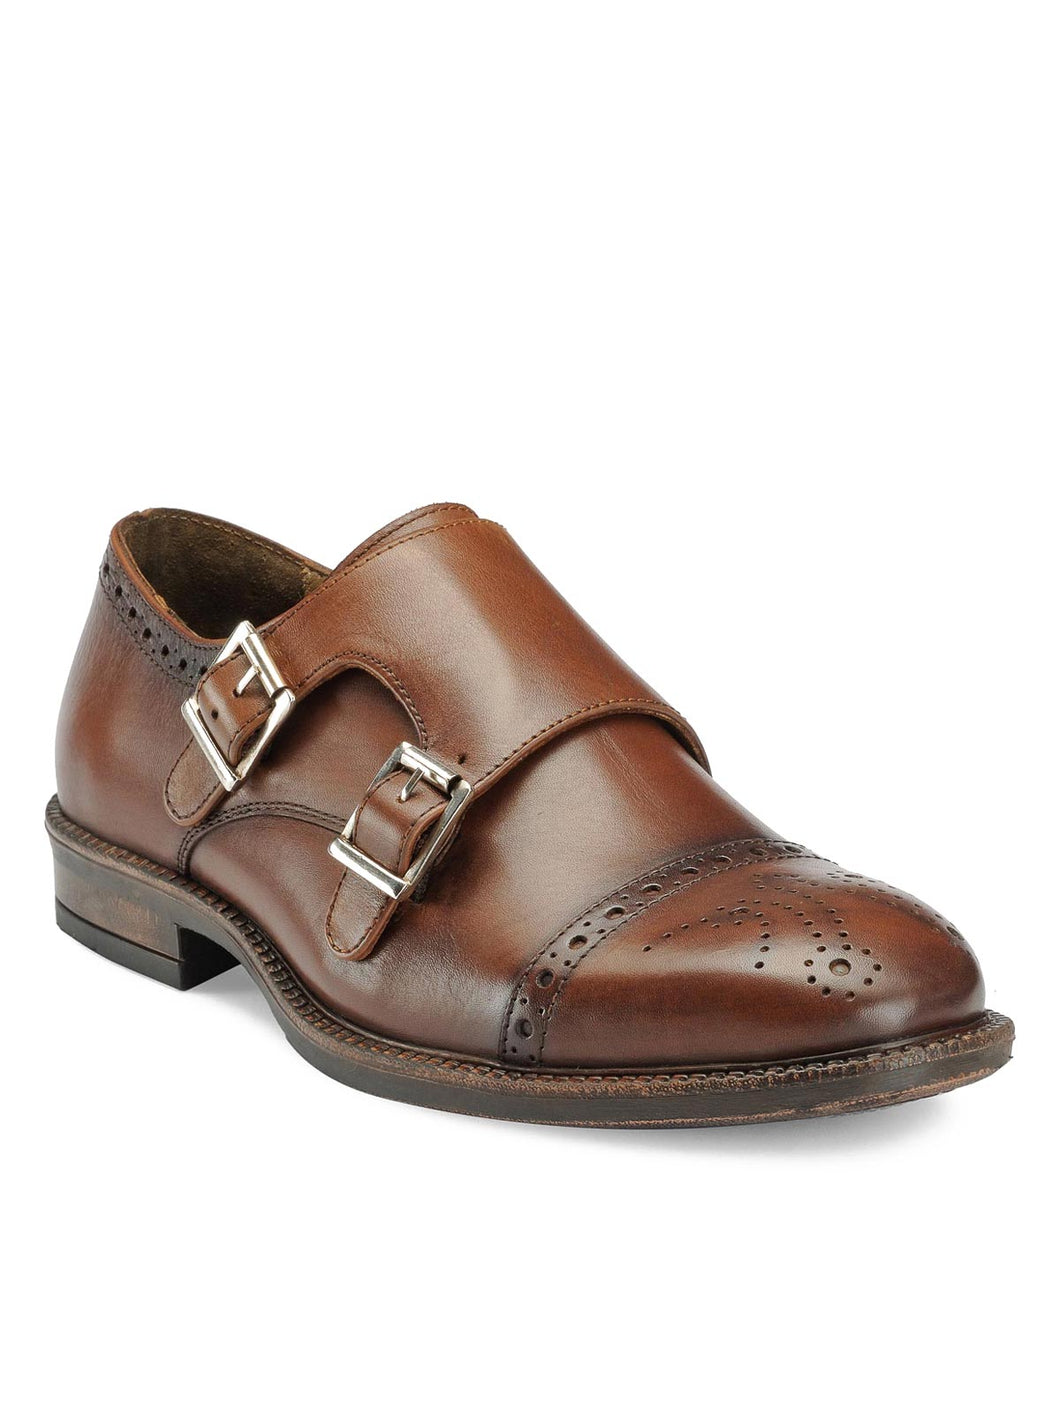 Teakwood Genuine Leather Monk Shoes